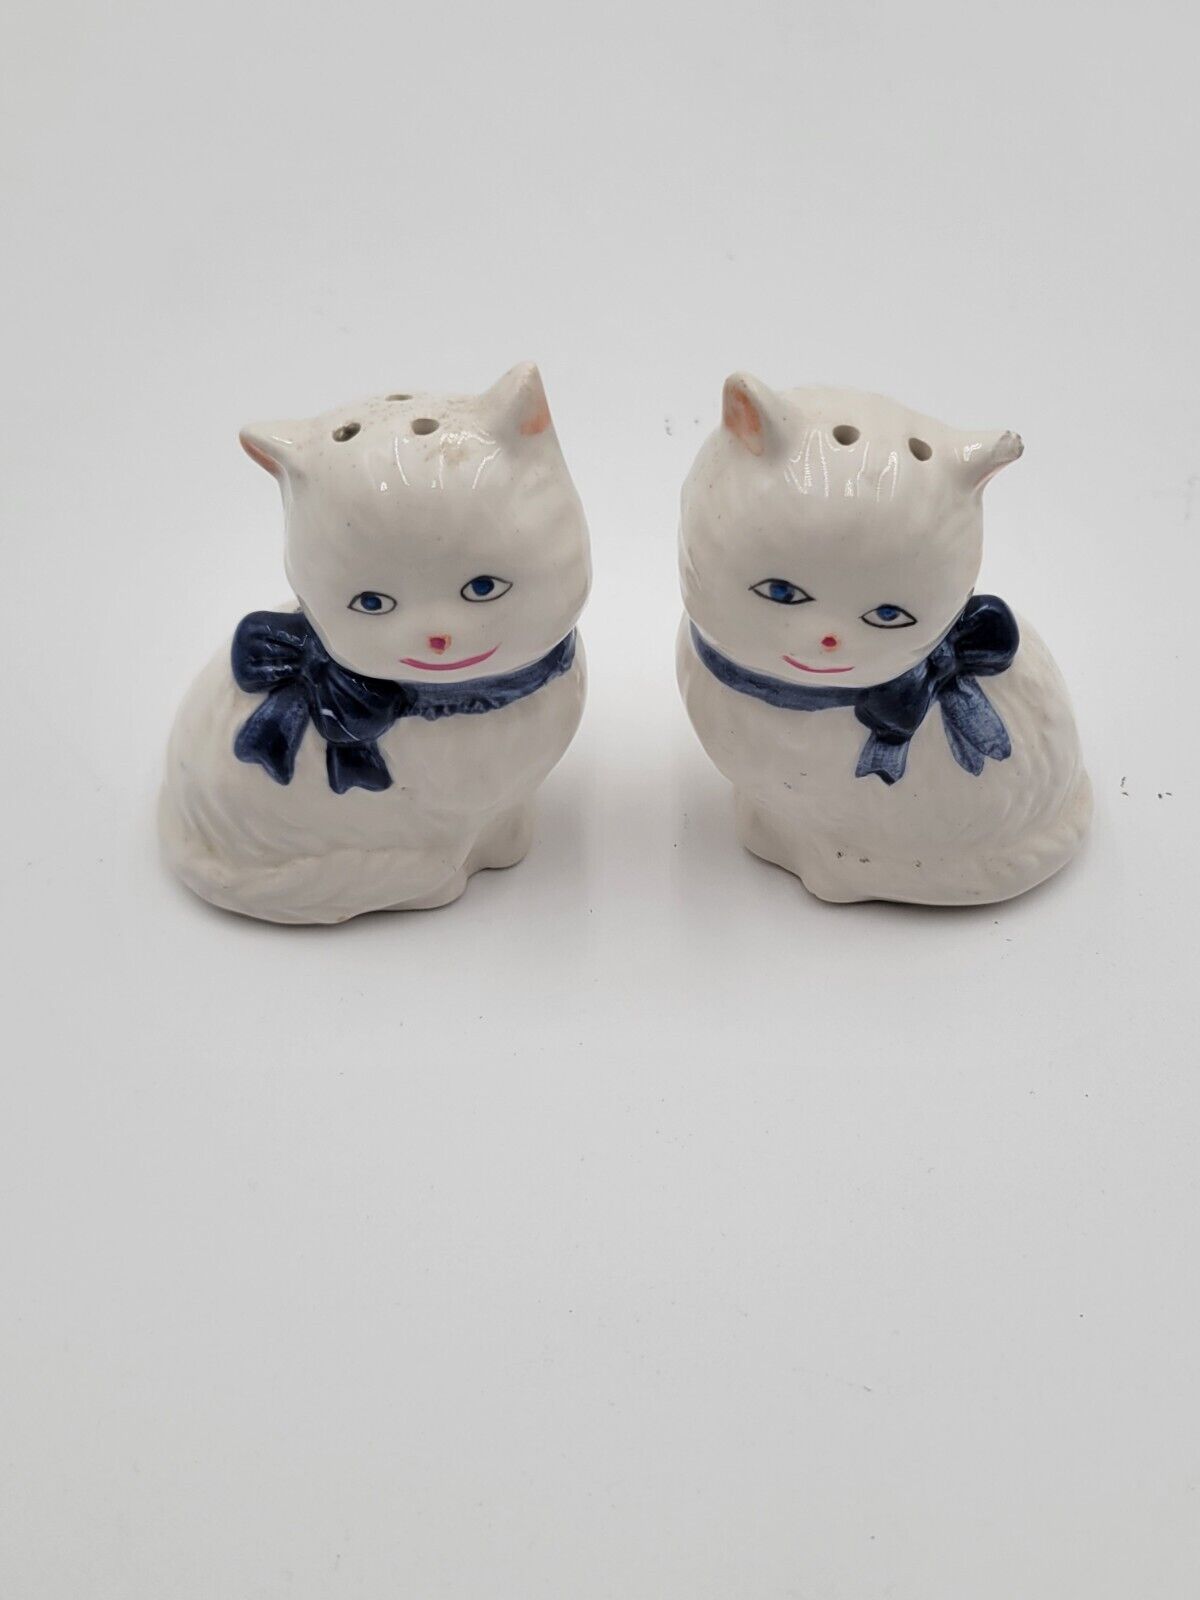 Vintage white ceramic cats (salt & pepper)